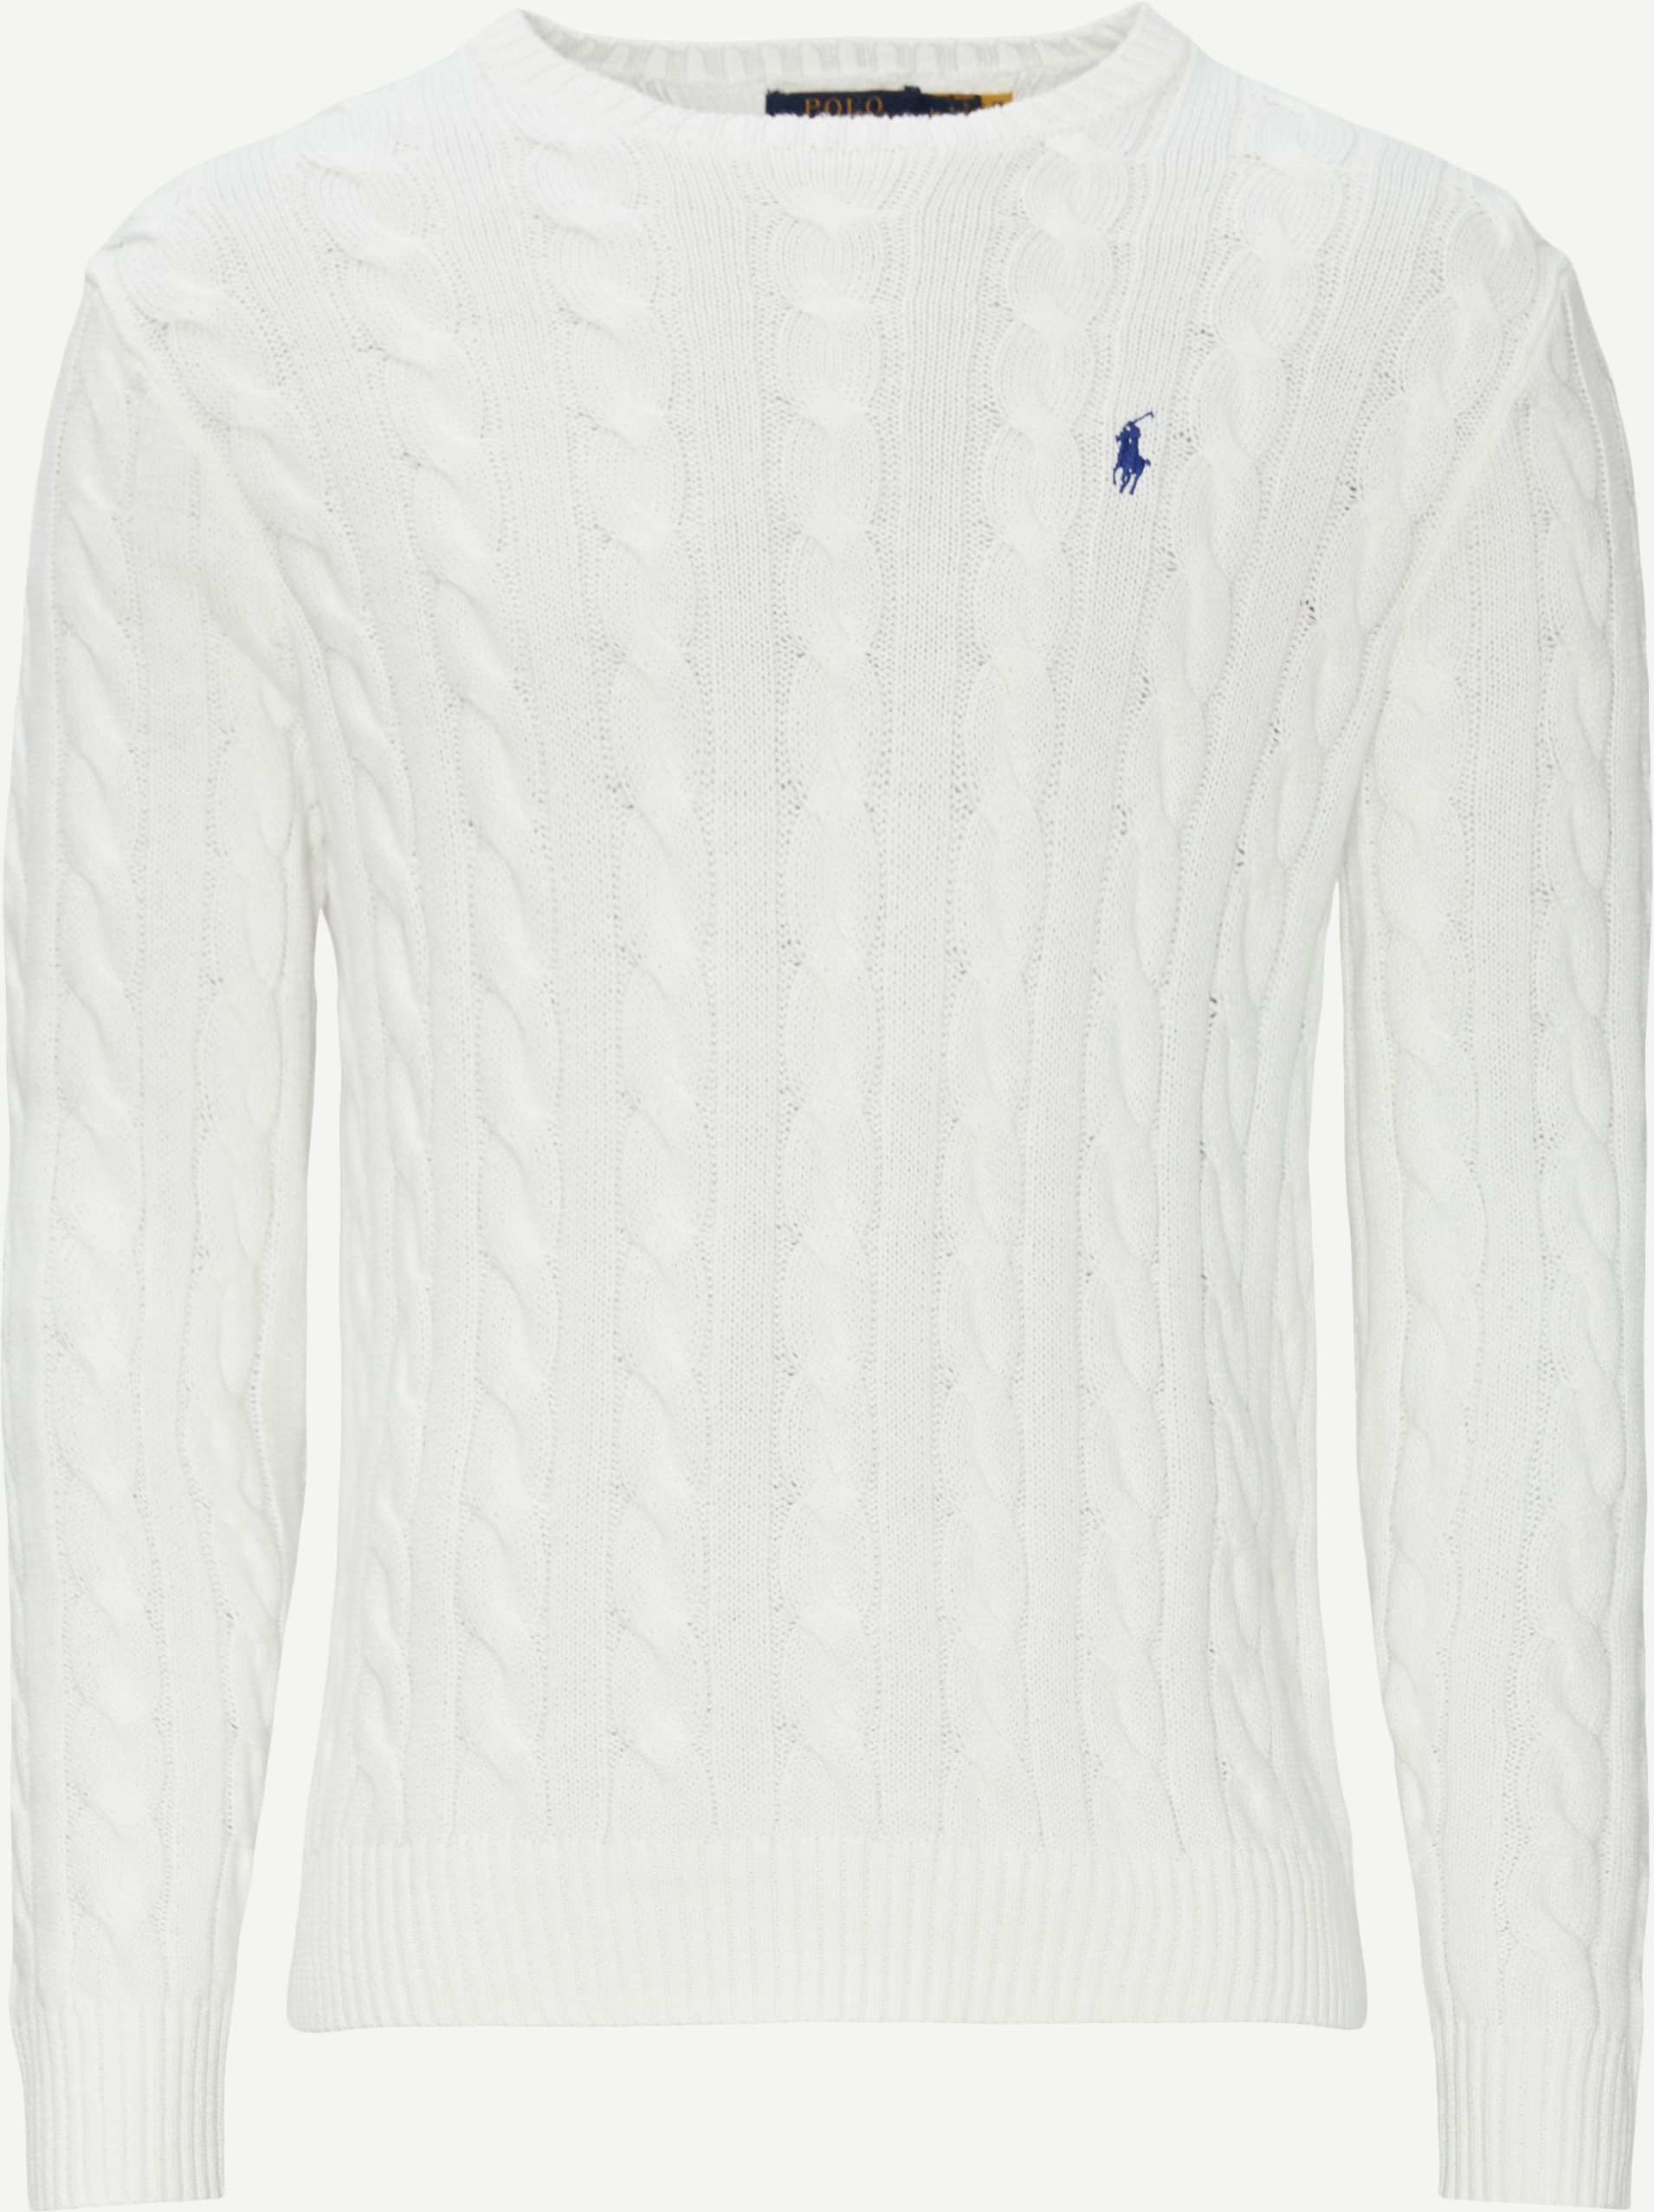 Polo Ralph Lauren Knitwear 710775885 White